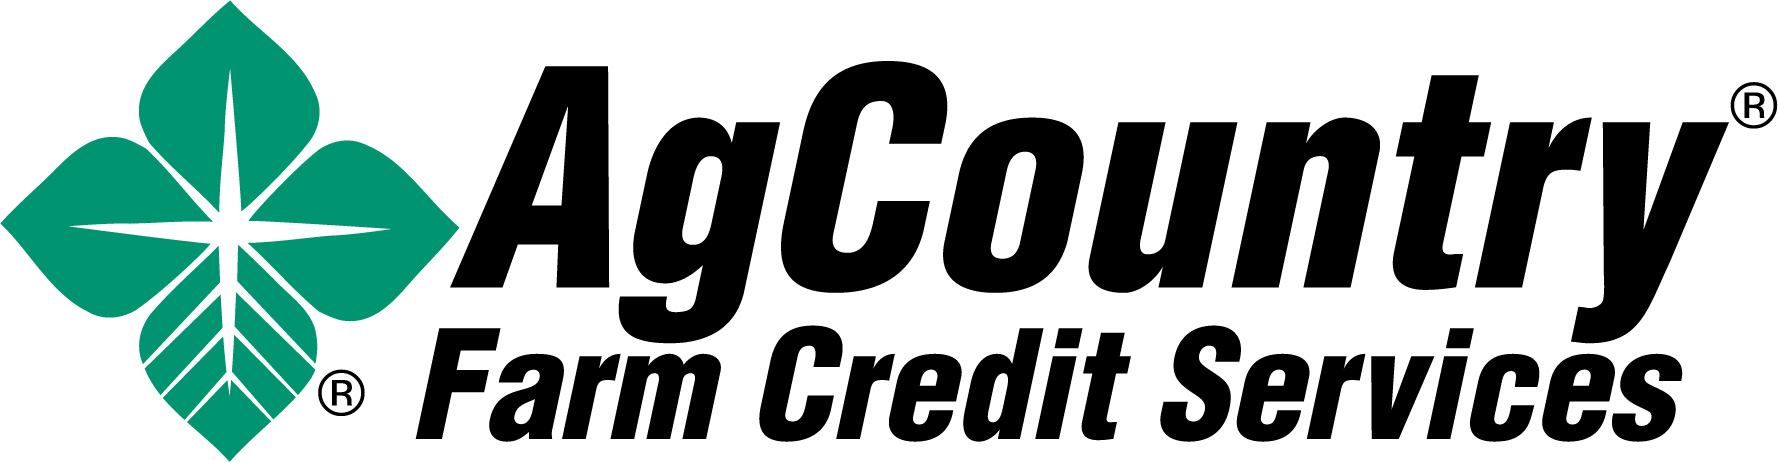 agcountry color logo